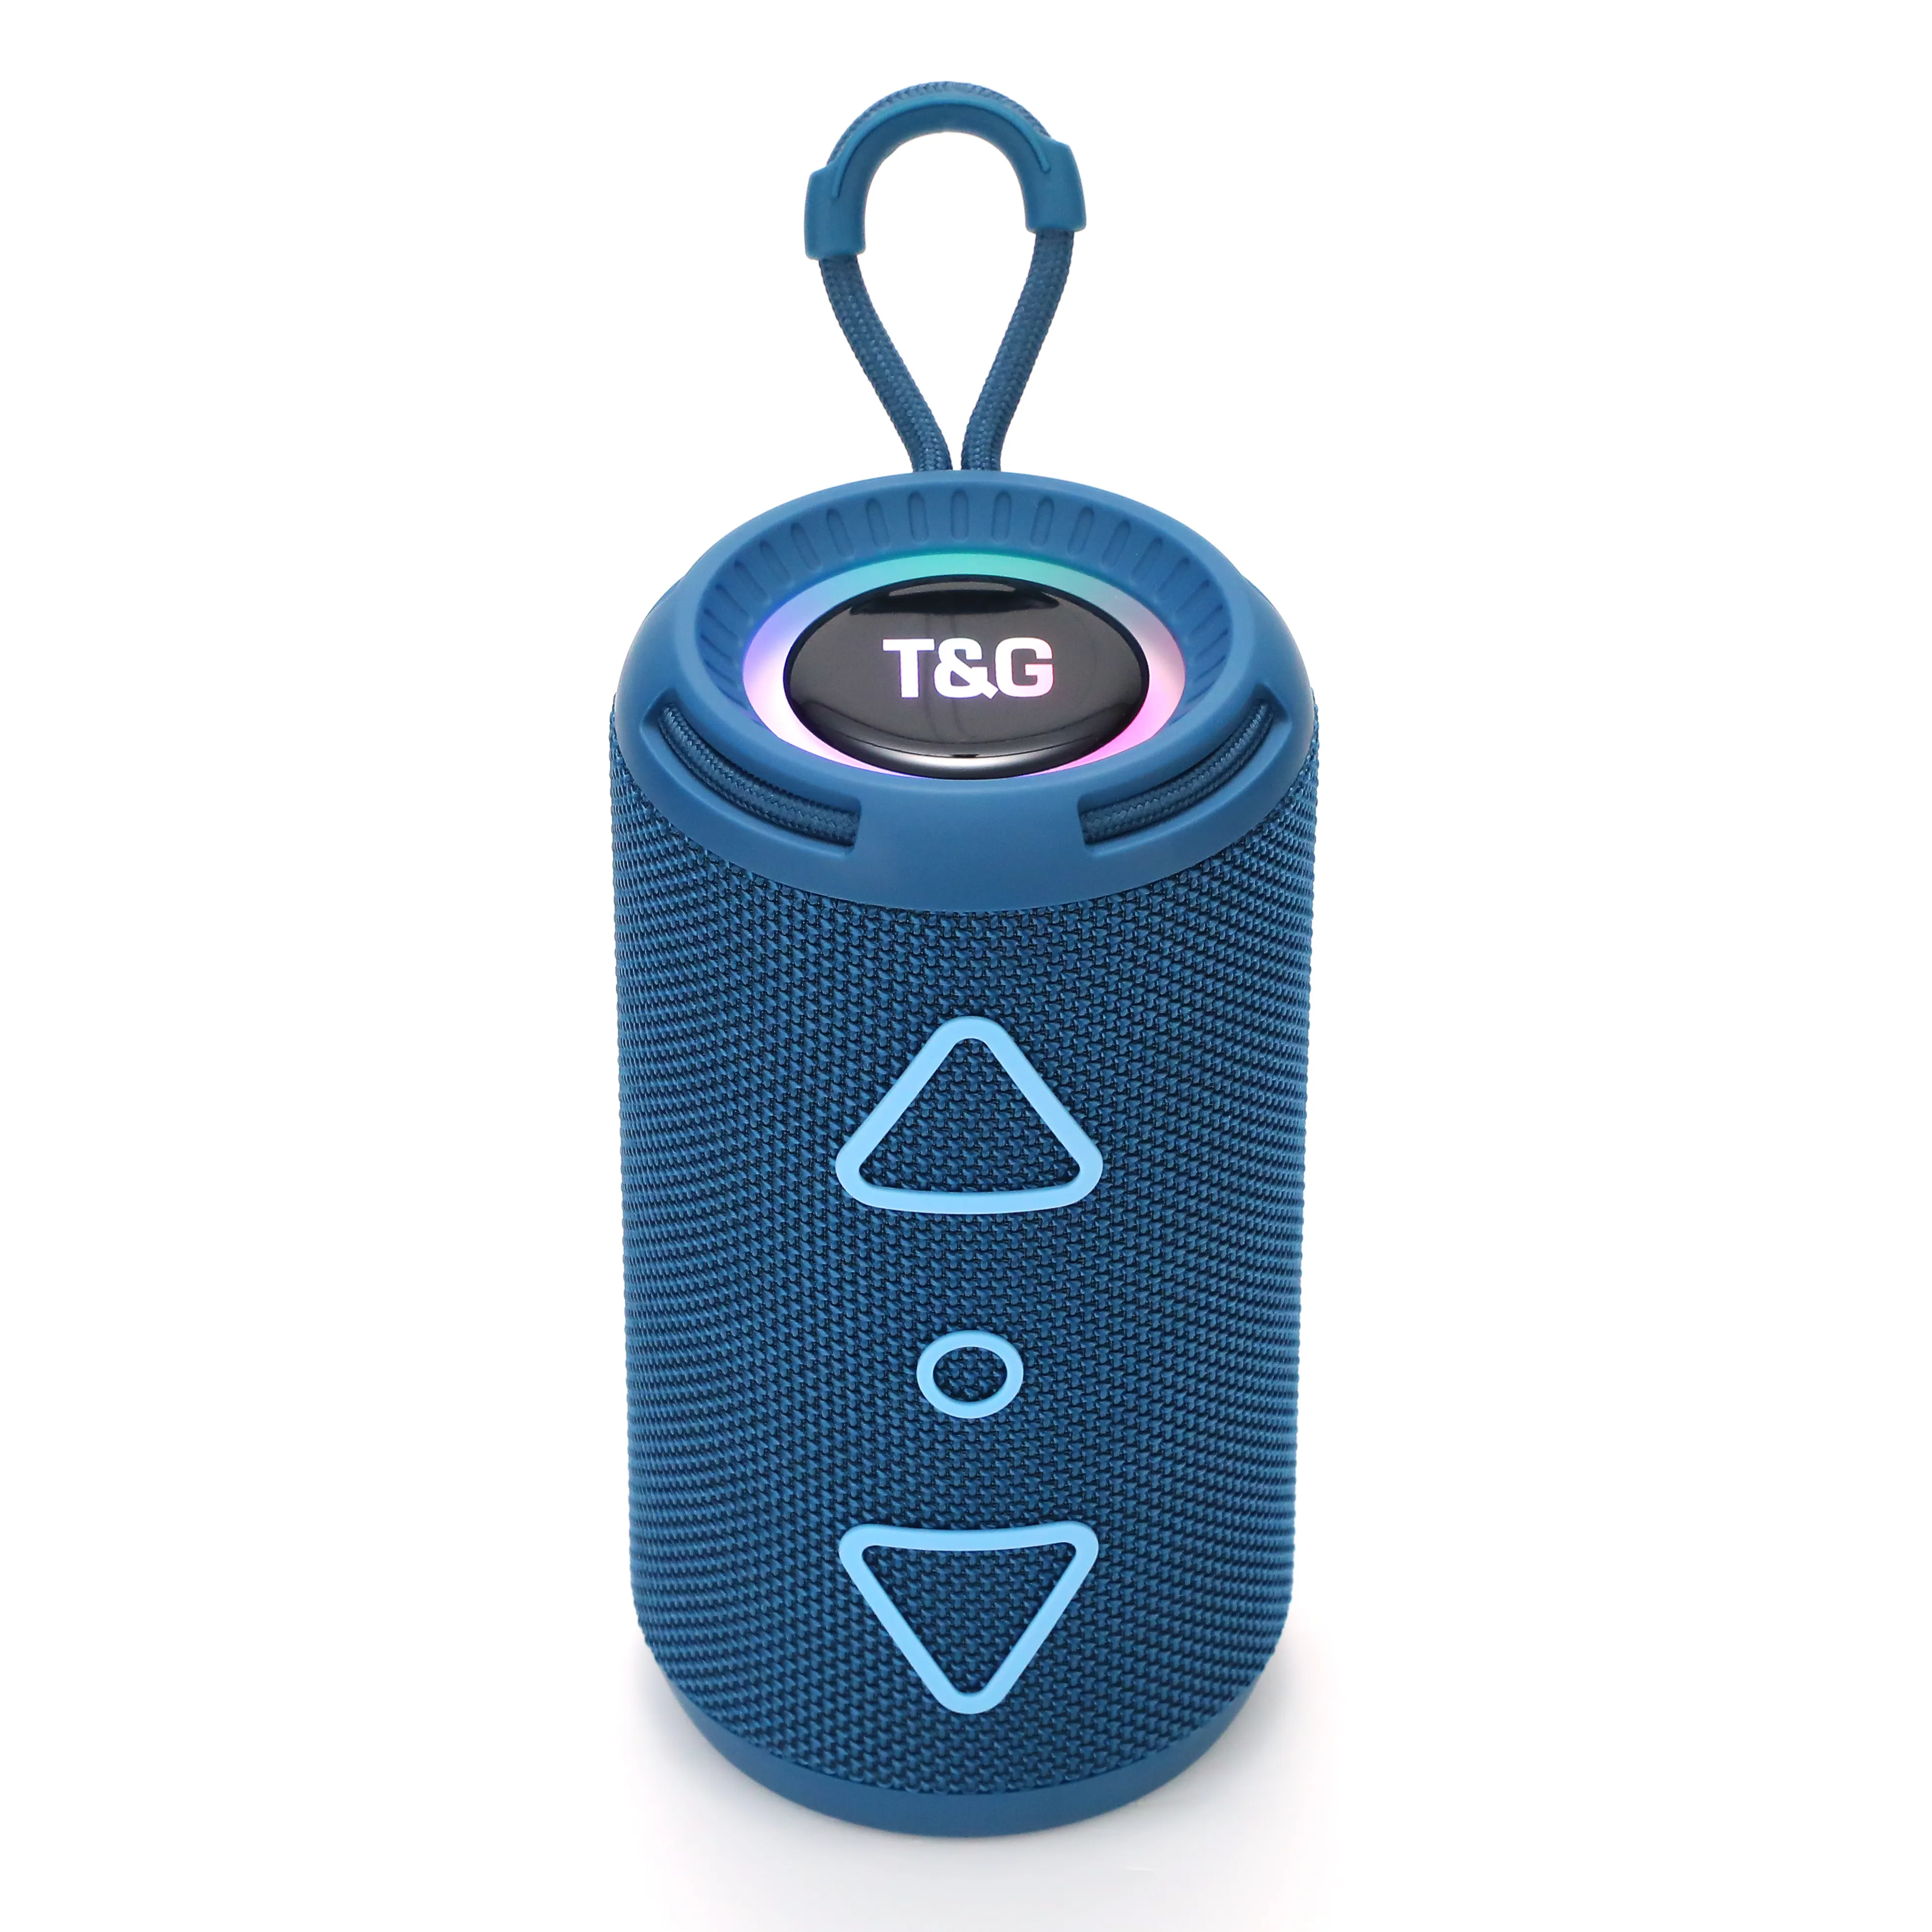 2023 new Top Sale TG656 Waterproof Speaker Wireless Hifi Tg117 Speaker Outdoor Stereo Mini BT Speaker TG656 pk tg117